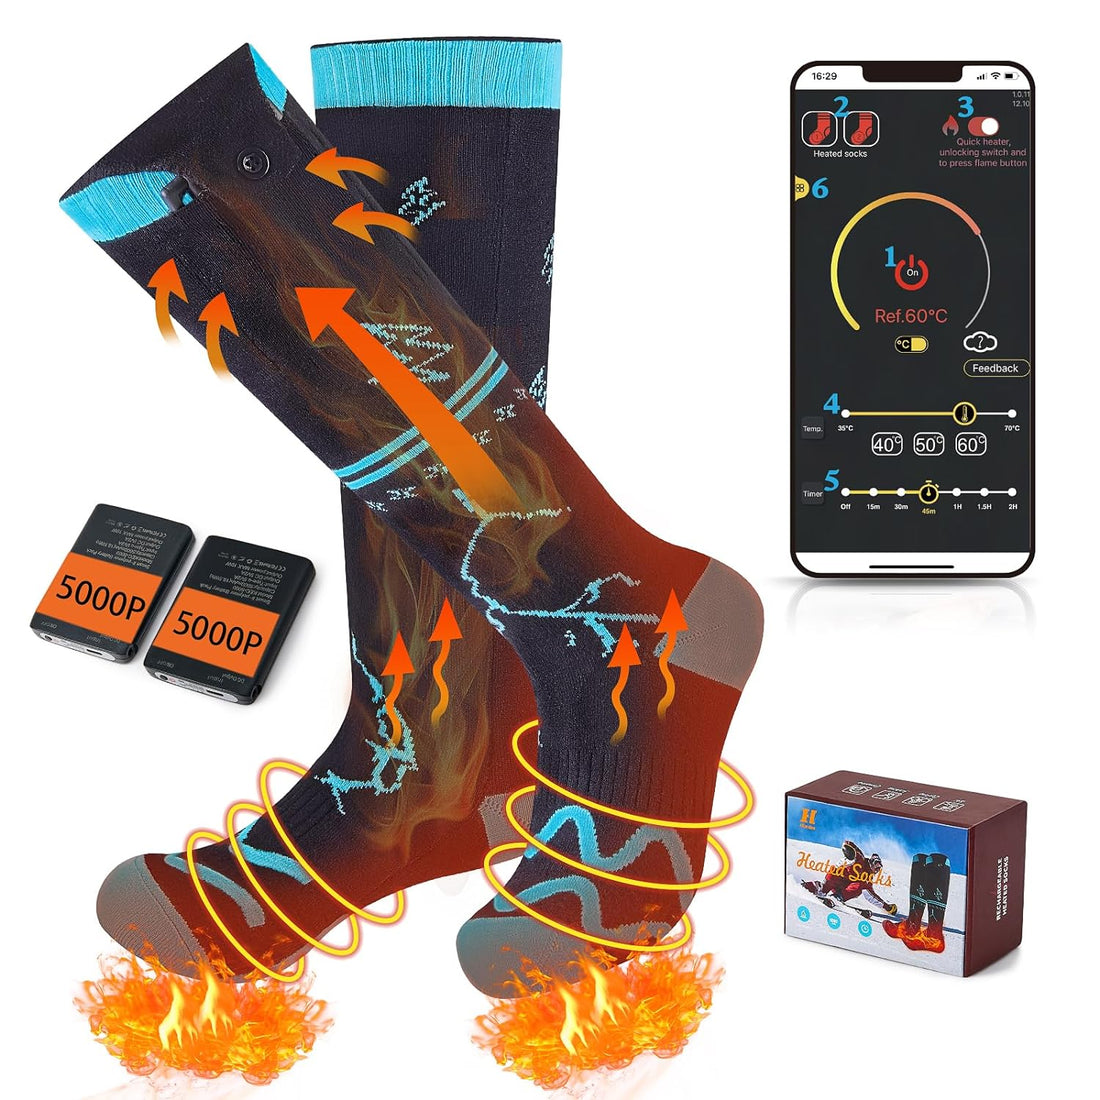 IFNOW Heated Socks for Men Women 5000mAh APP Control Battery Heated Socks Rechargeable Washable Electric Socks Foot Warmer for Hiking Biking Camping Skiing Hunting Outdoor Work Warm Socks